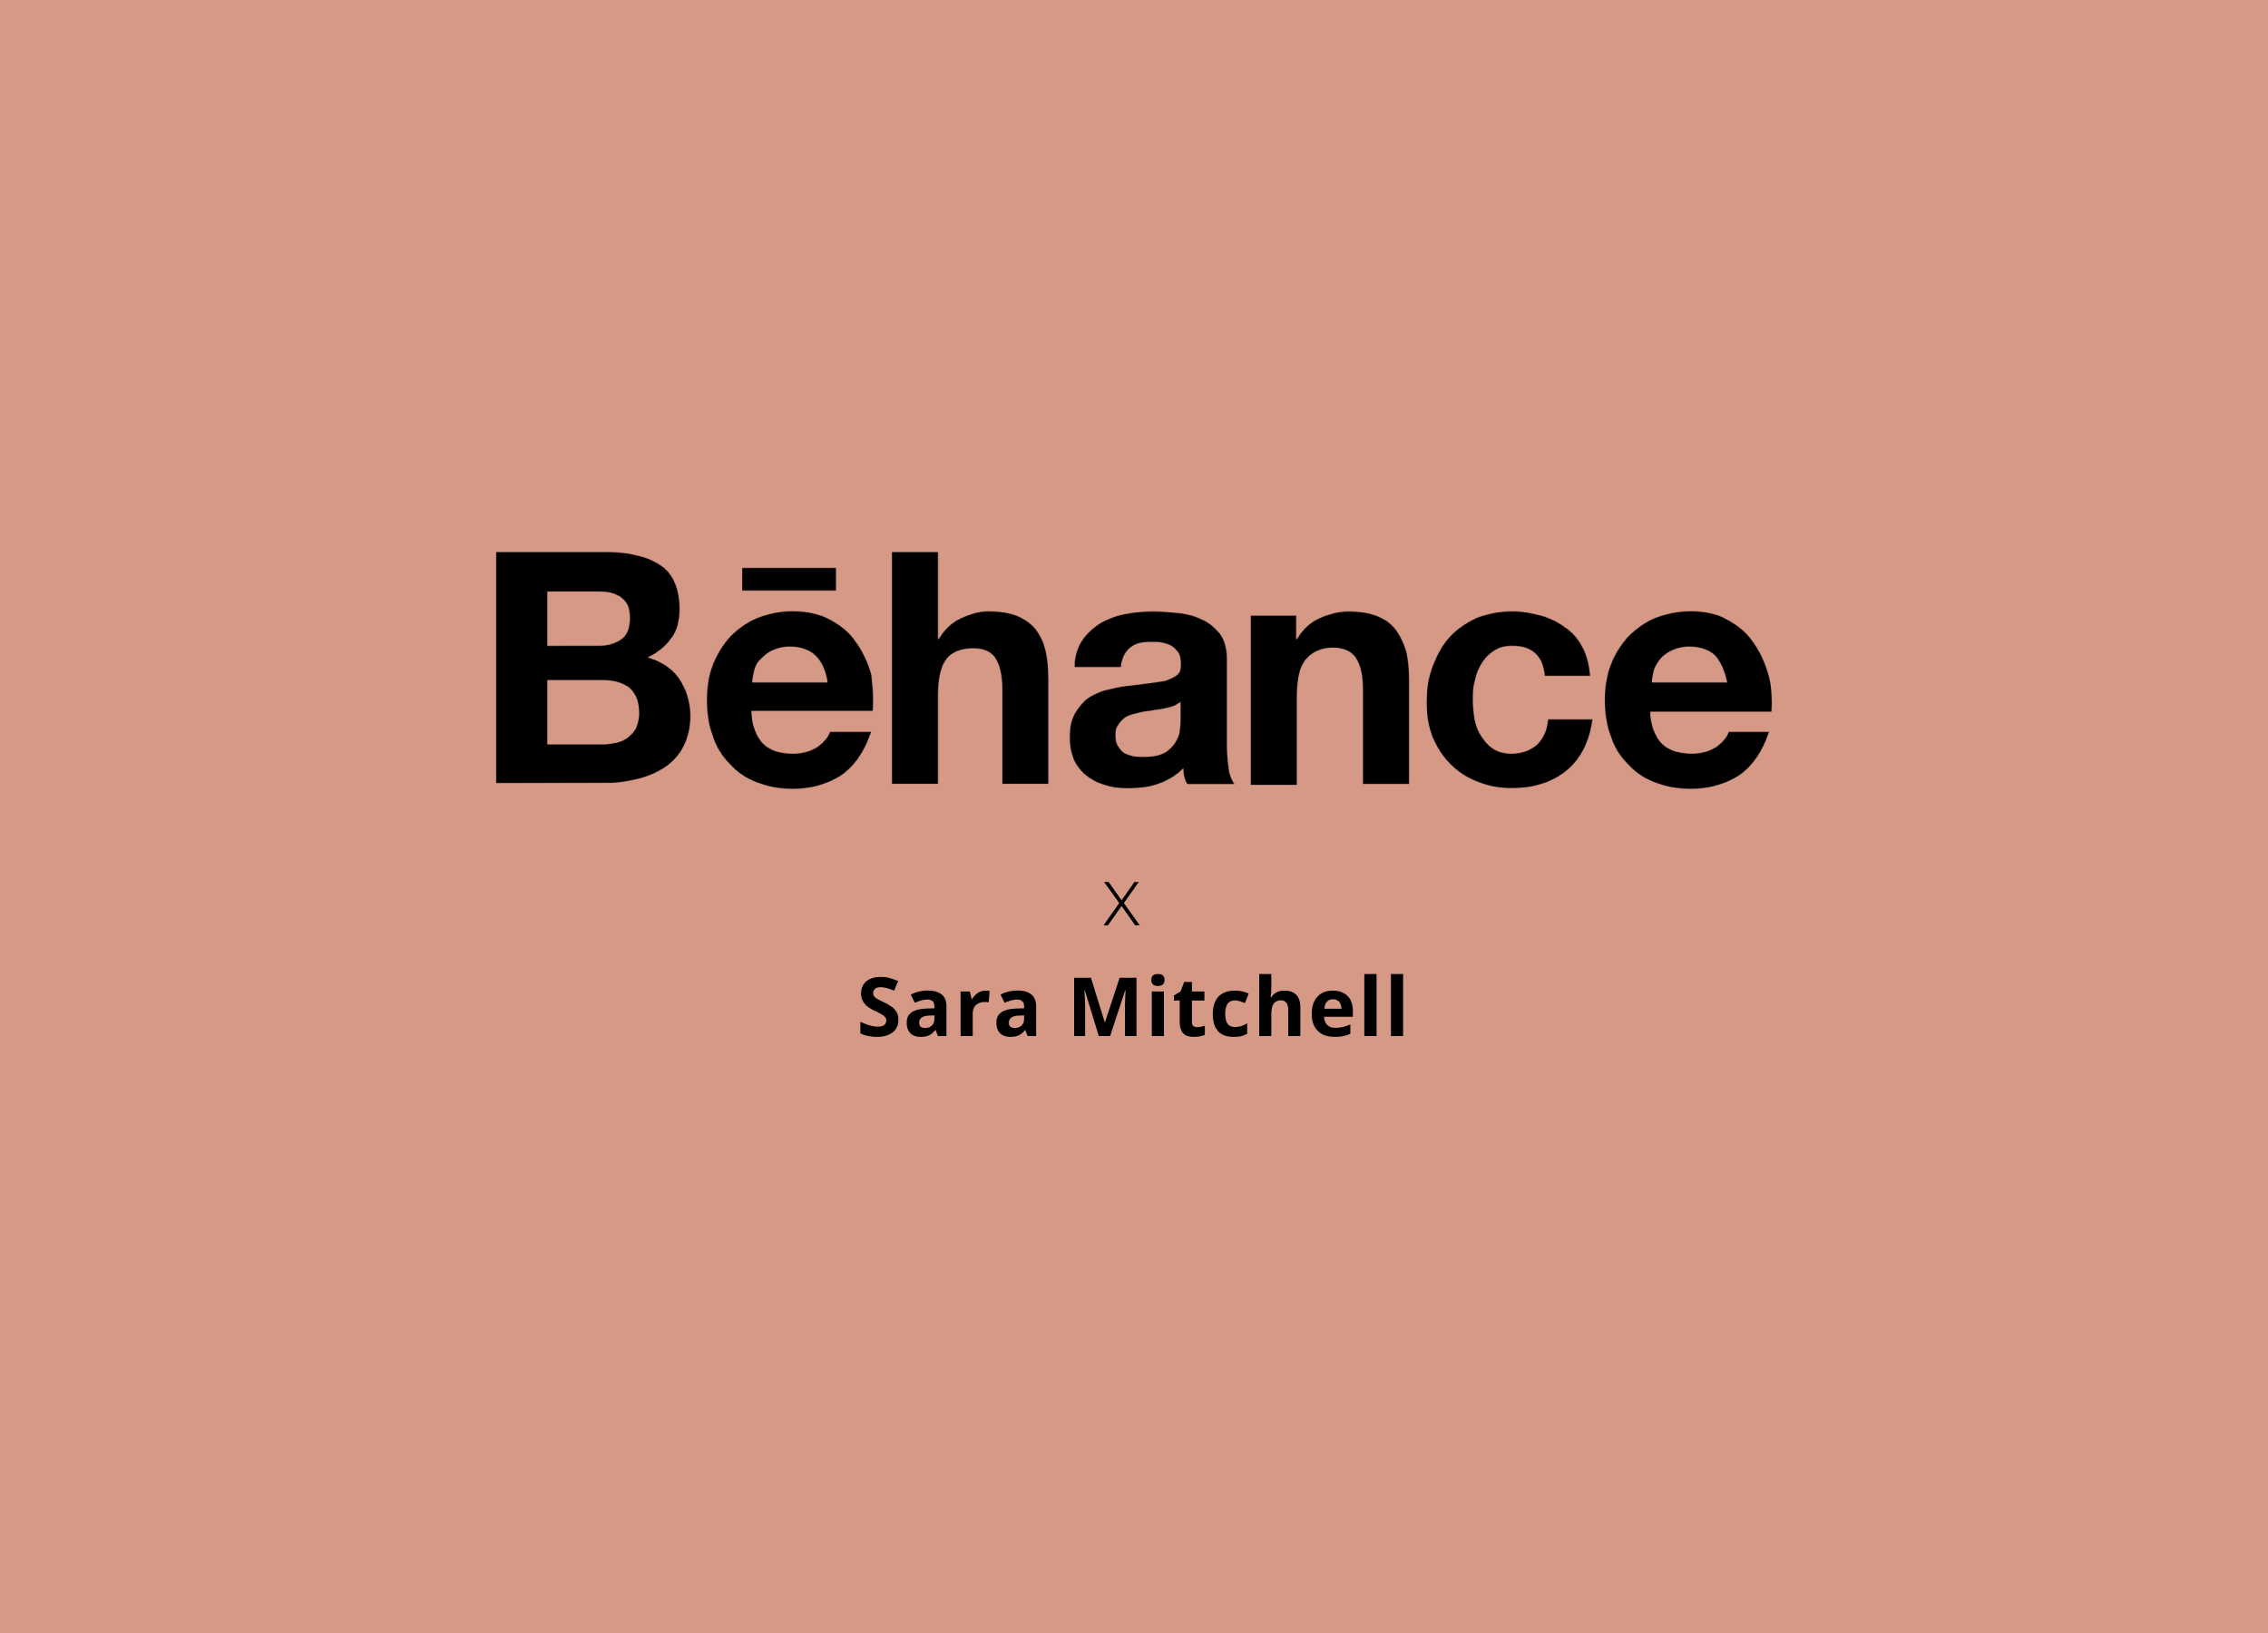 Sara Mitchell on Behance